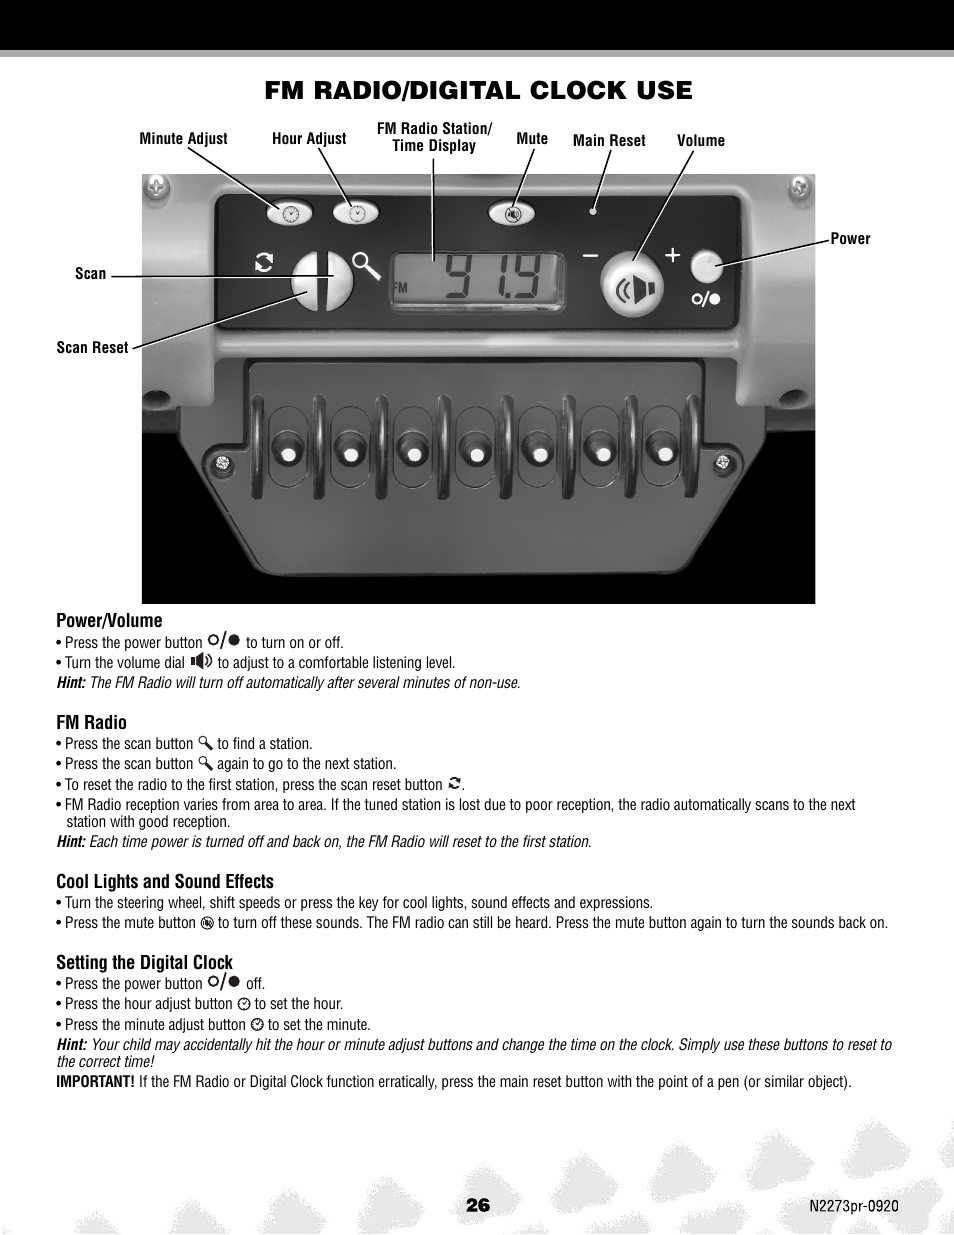 Fm radio/digital clock use | Fisher-Price JEEP HURRICANE N2273 User Manual  | Page 26 / 32